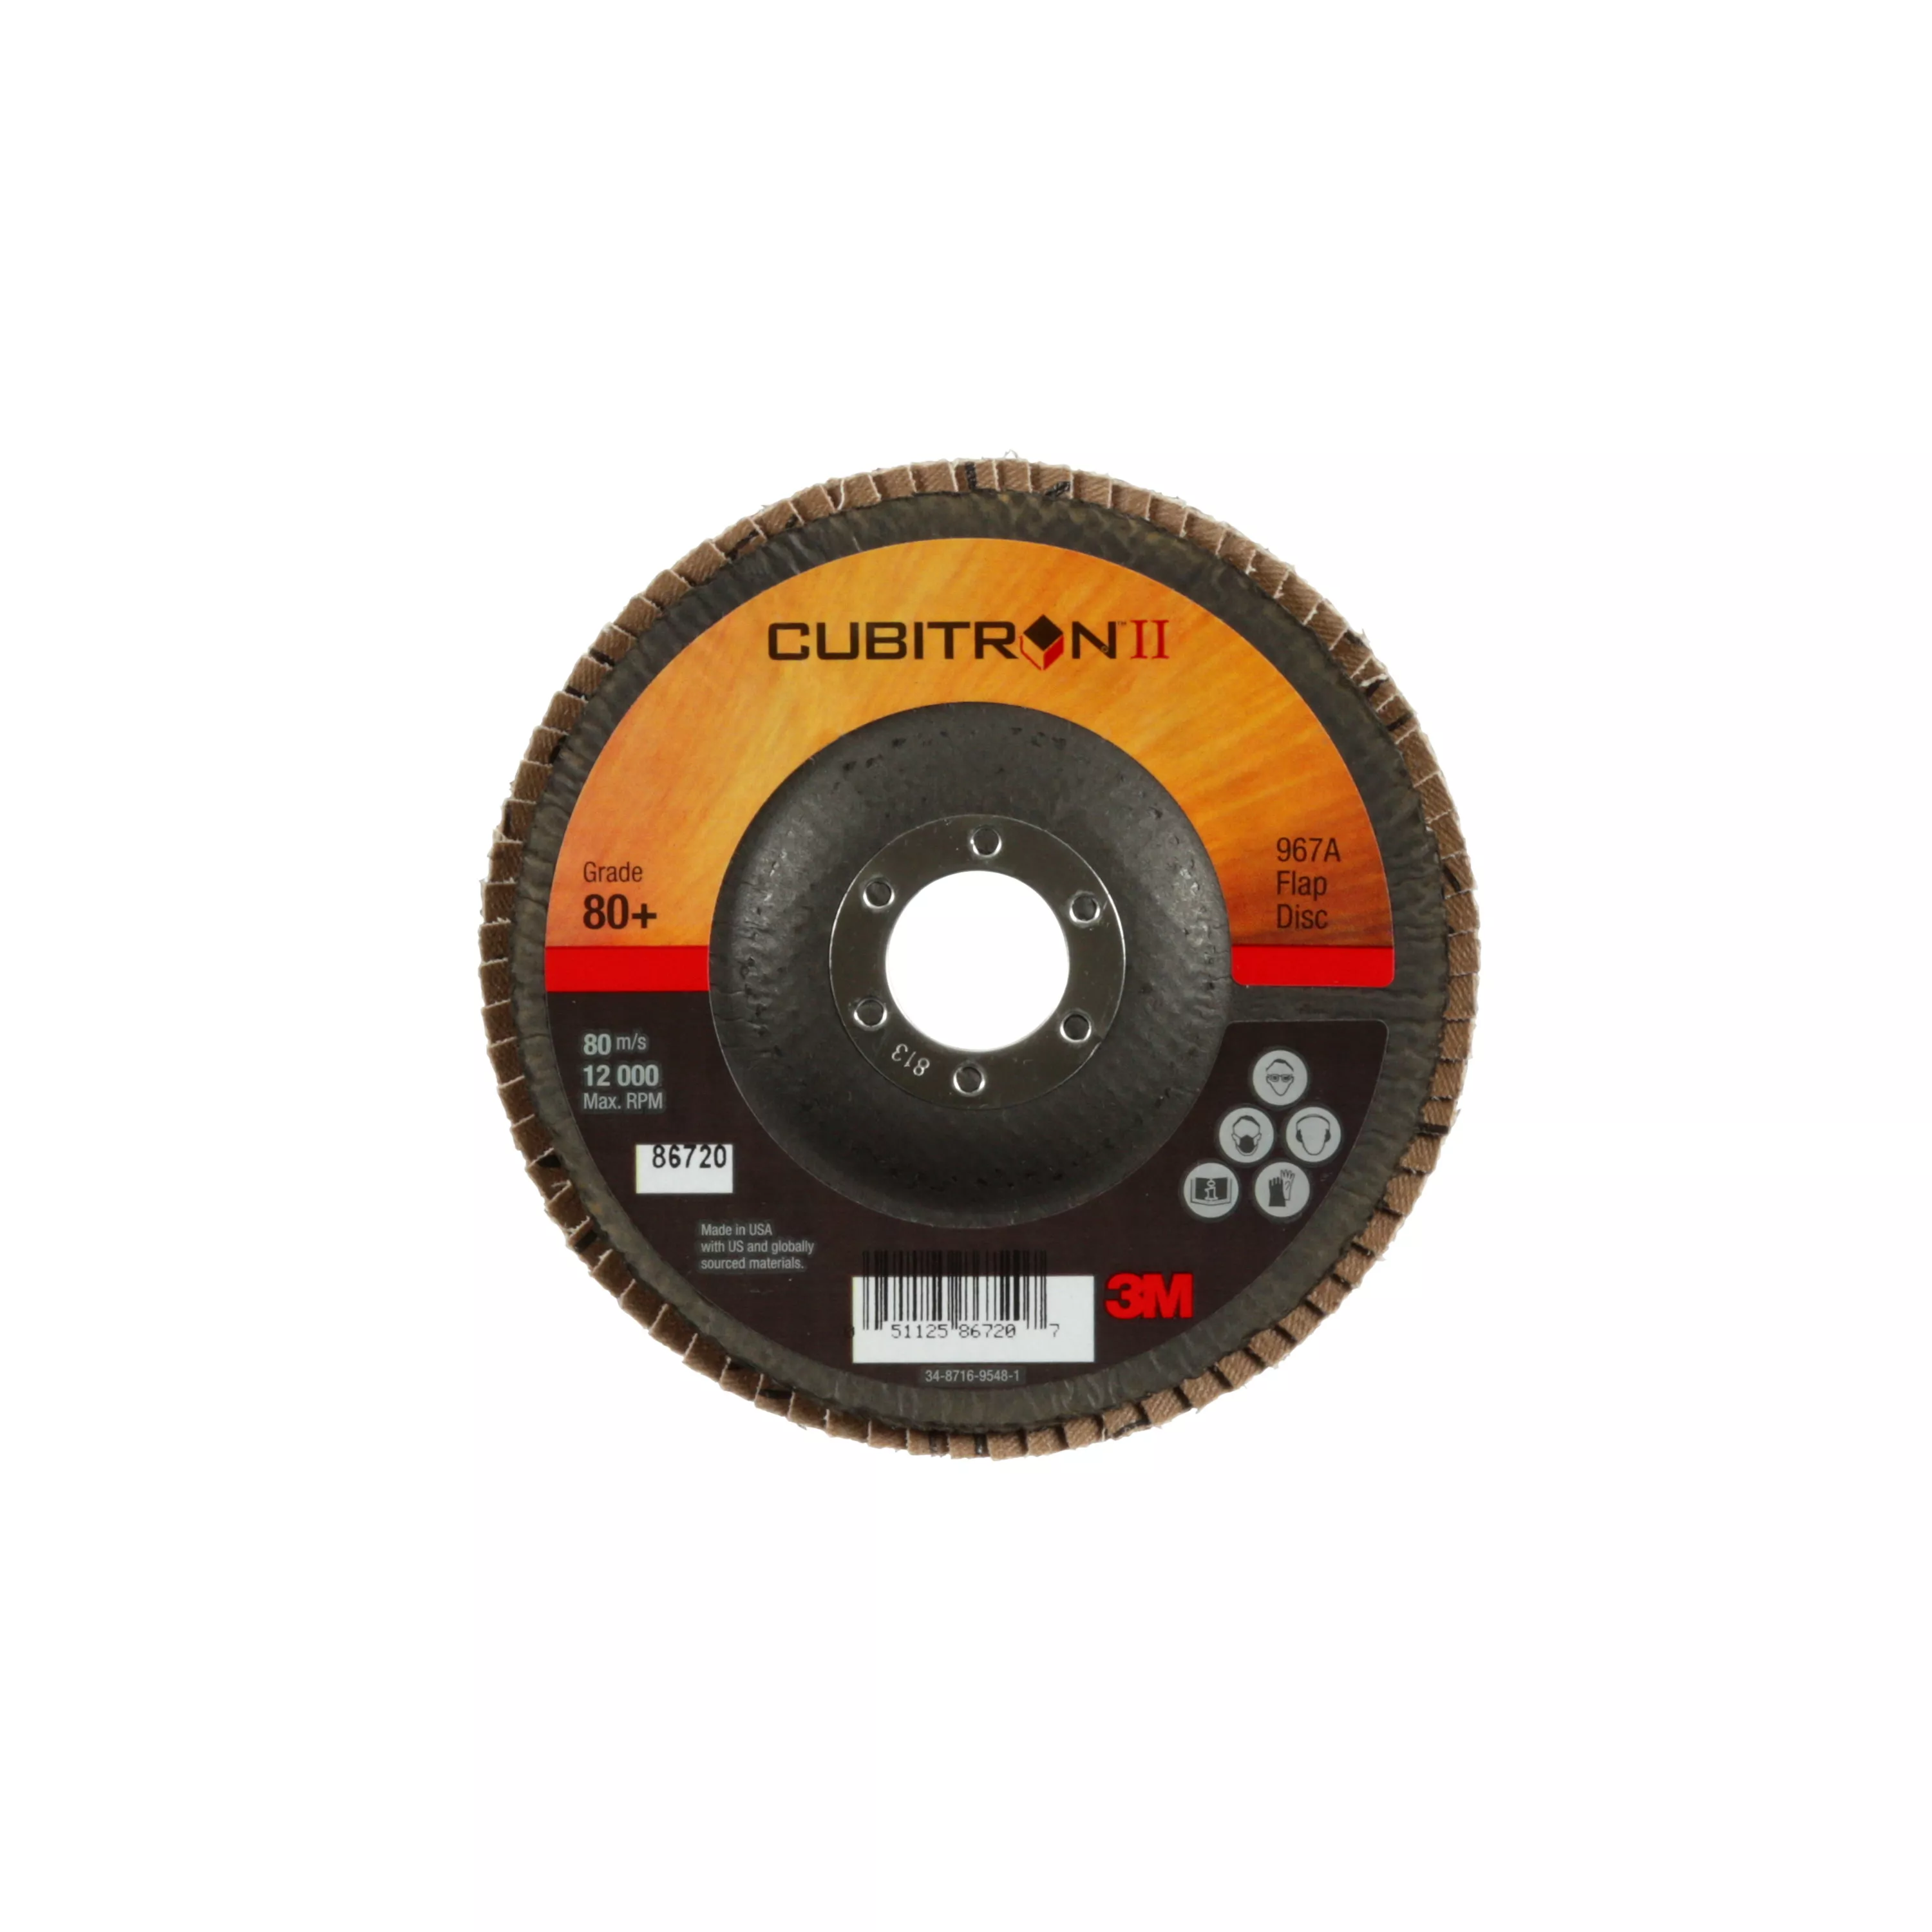 SKU 7000148201 | 3M™ Cubitron™ II Flap Disc 967A